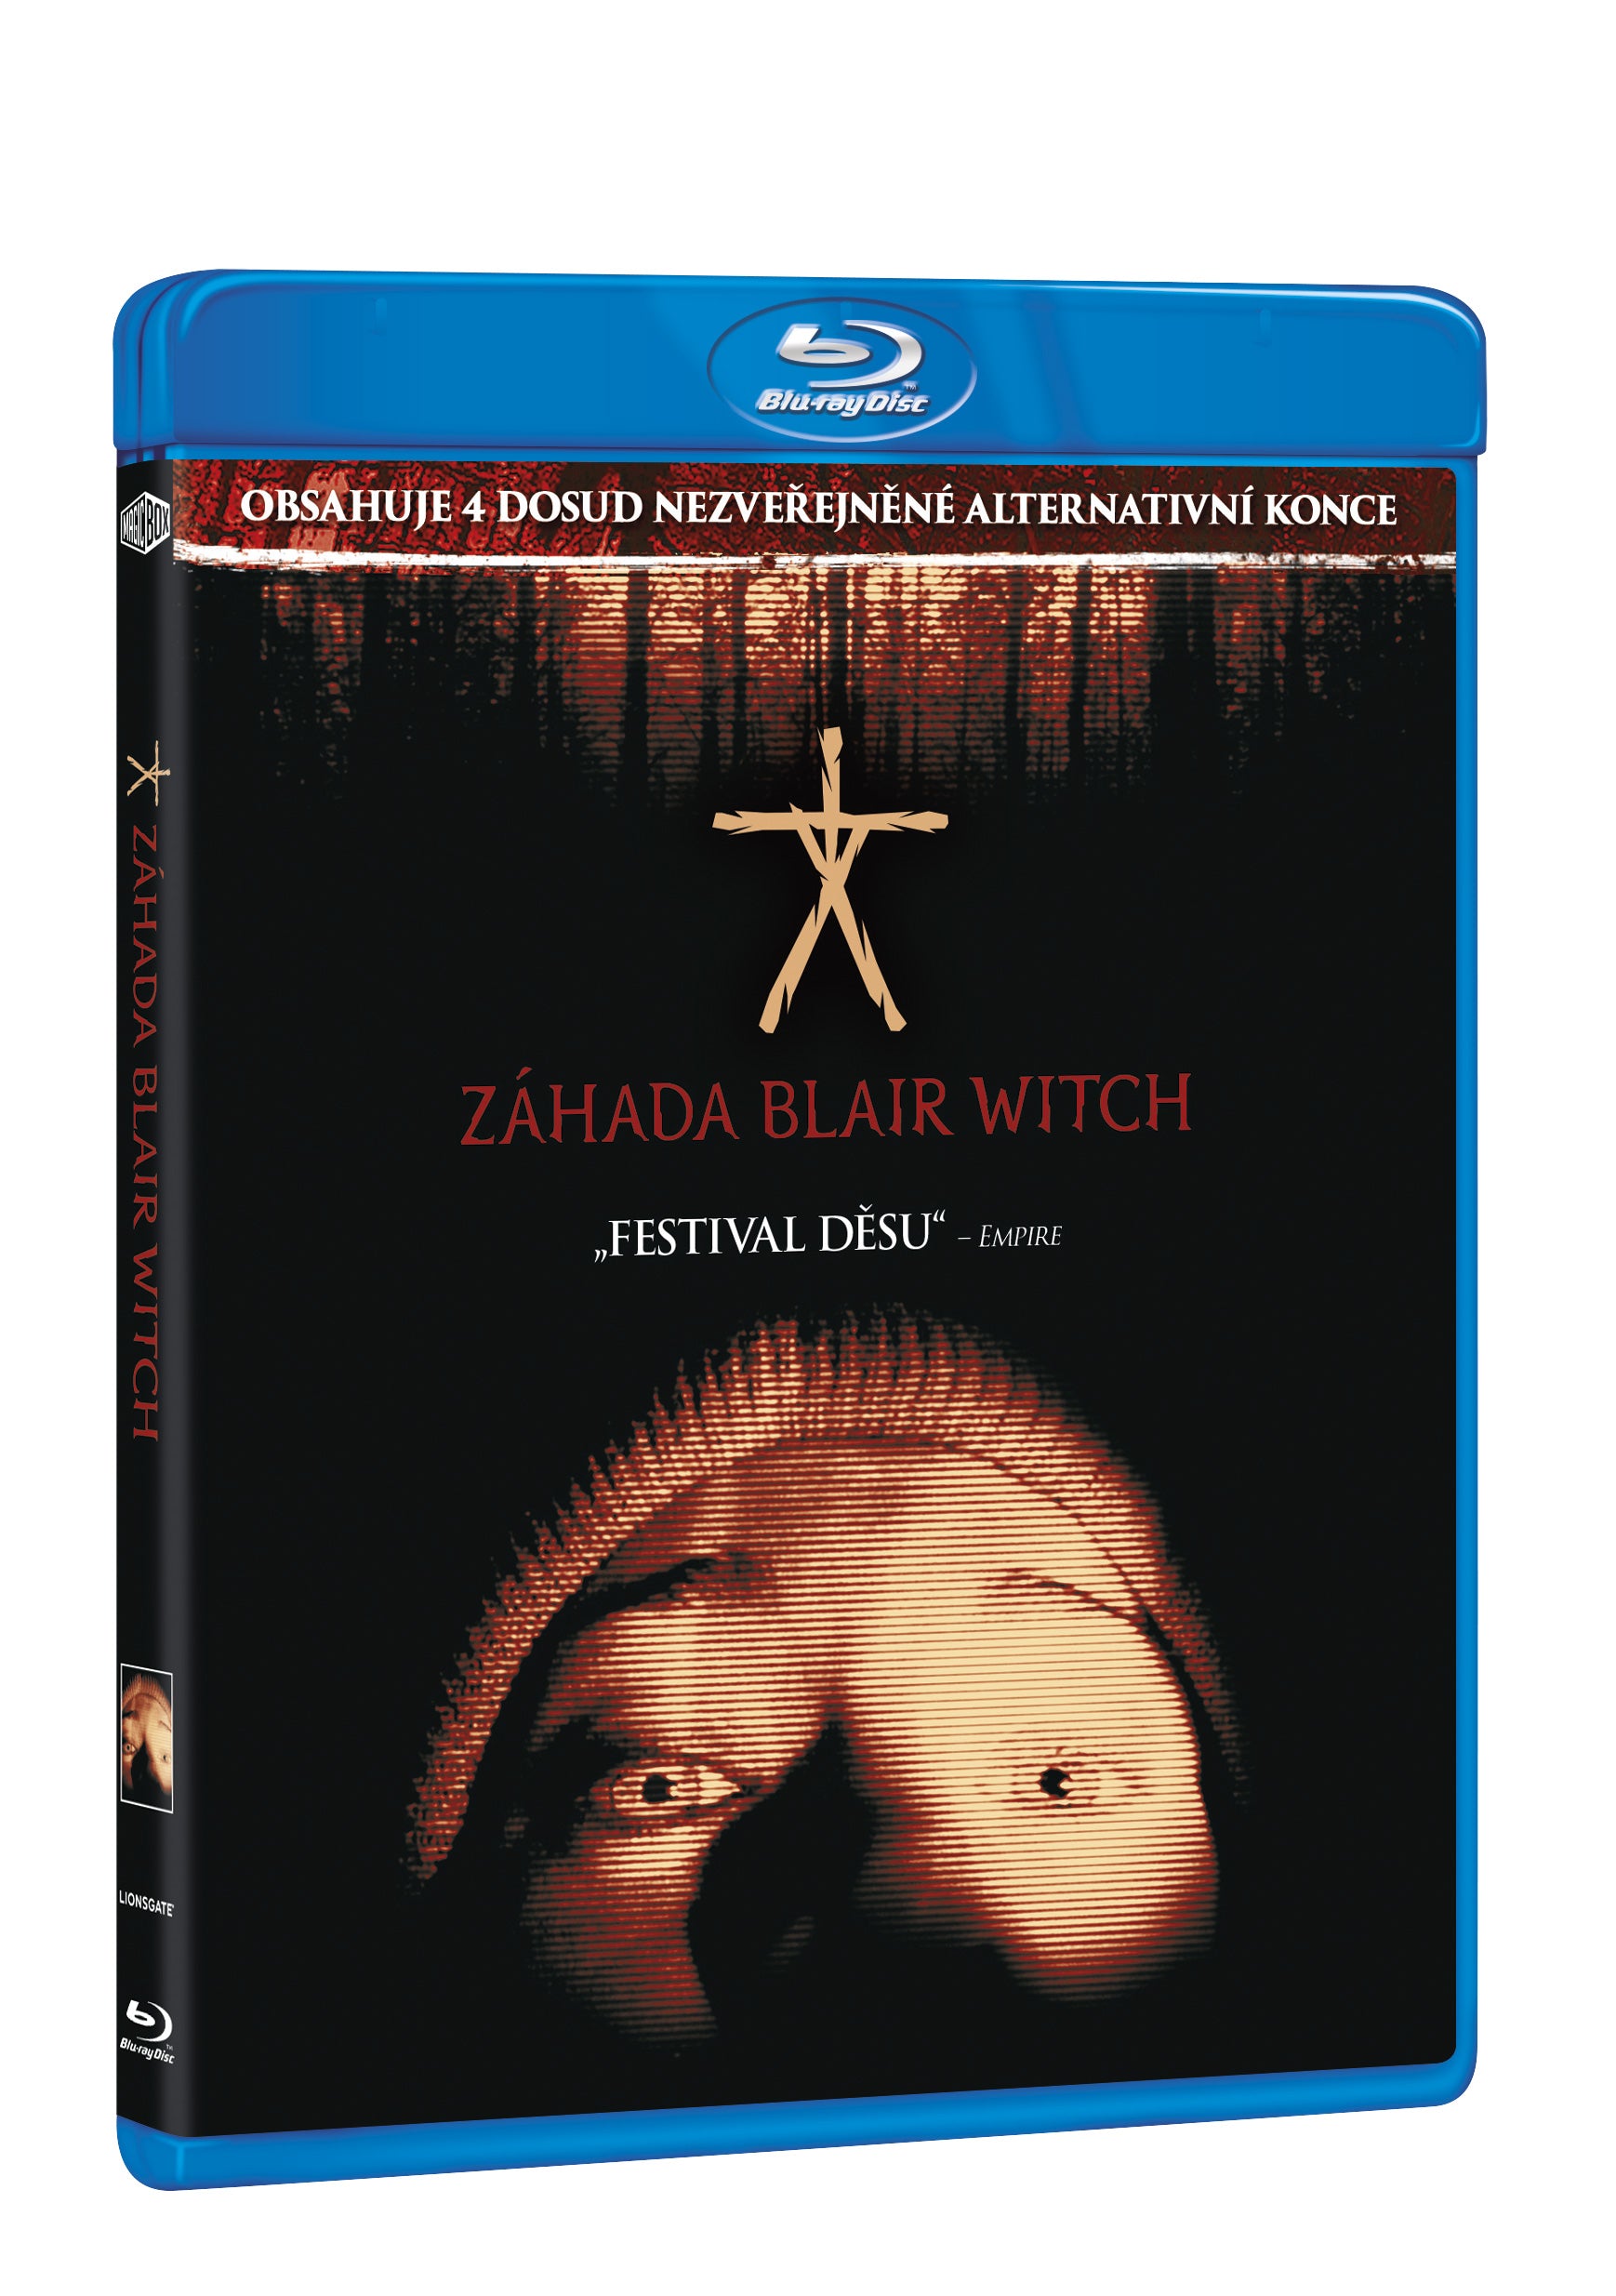 Zahada Blair Witch BD / The Blair Witch Project - Czech version